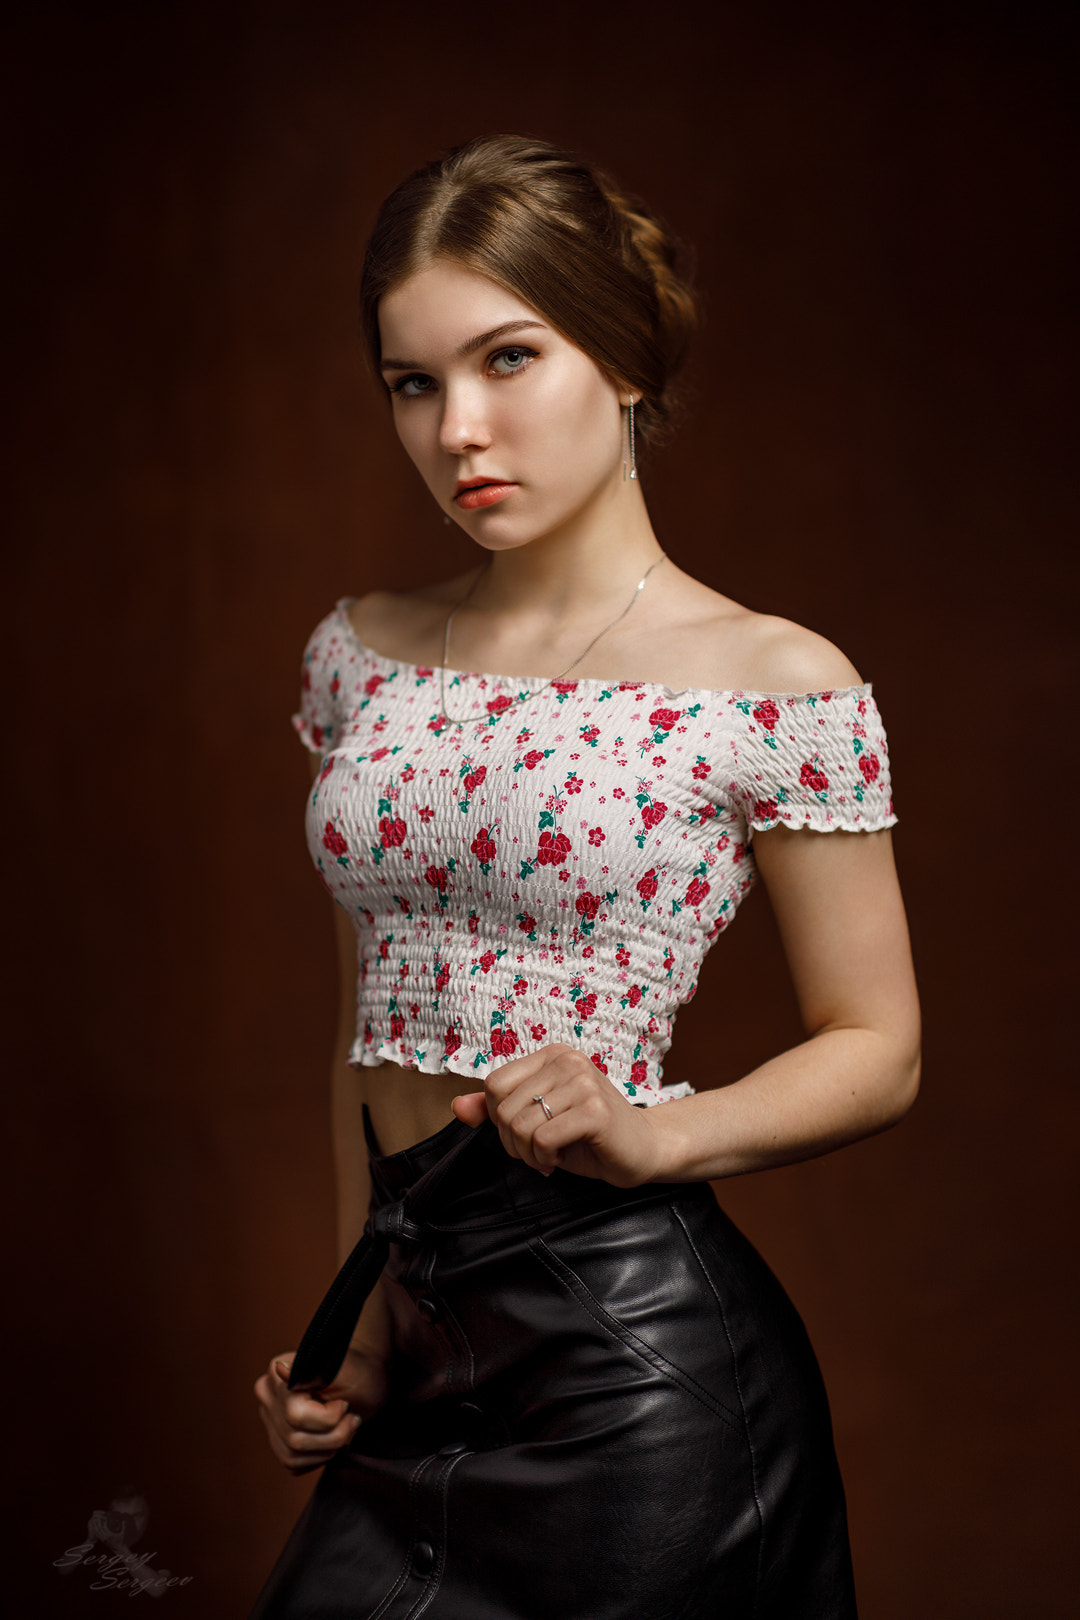 Sergey Sergeev Women Brunette Hairbun Makeup Blouse Necklace Skirt Leather Holding Clothes Simple Ba 1080x1620